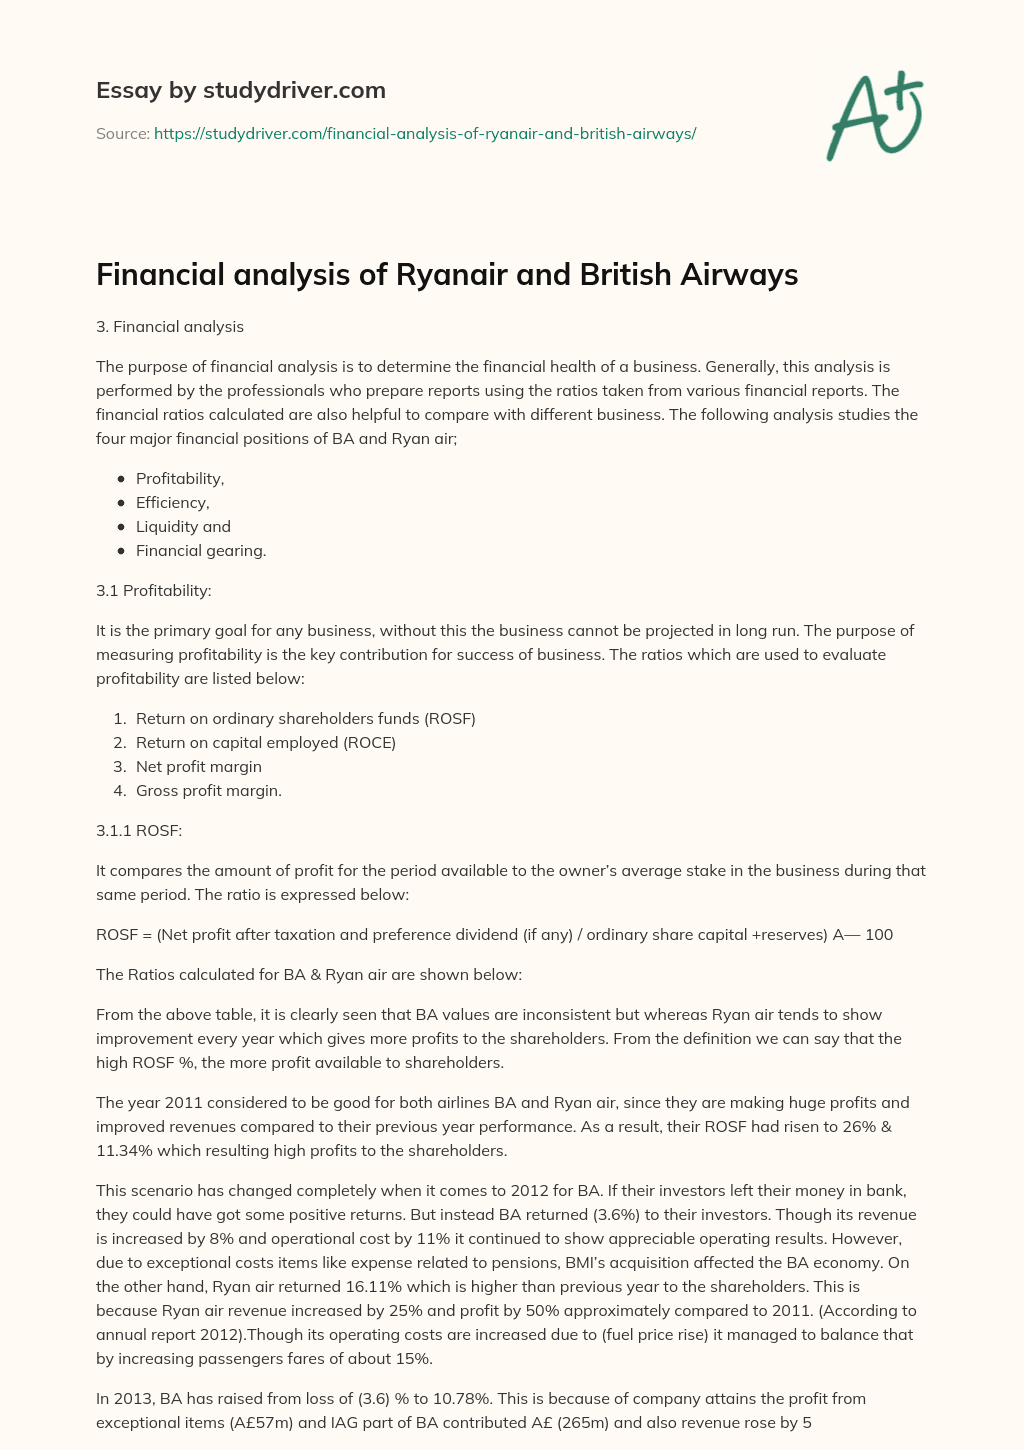 Financial Analysis of Ryanair and British Airways essay